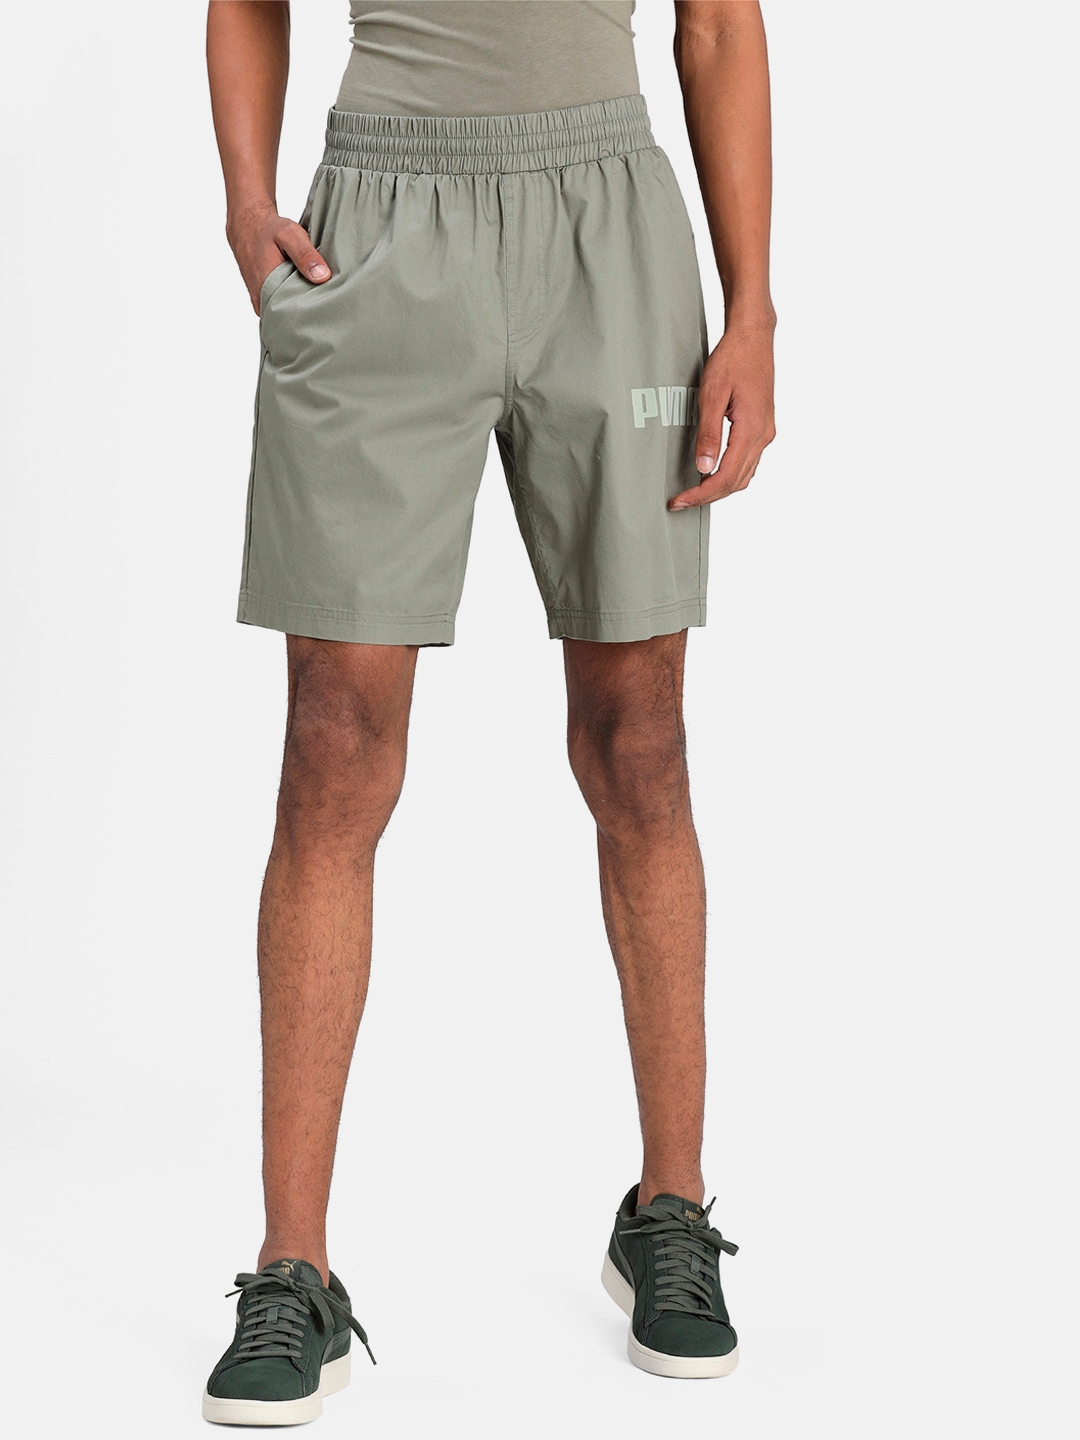 Puma Men Olive Green Solid MODERN BASICS Regular Fit Shorts